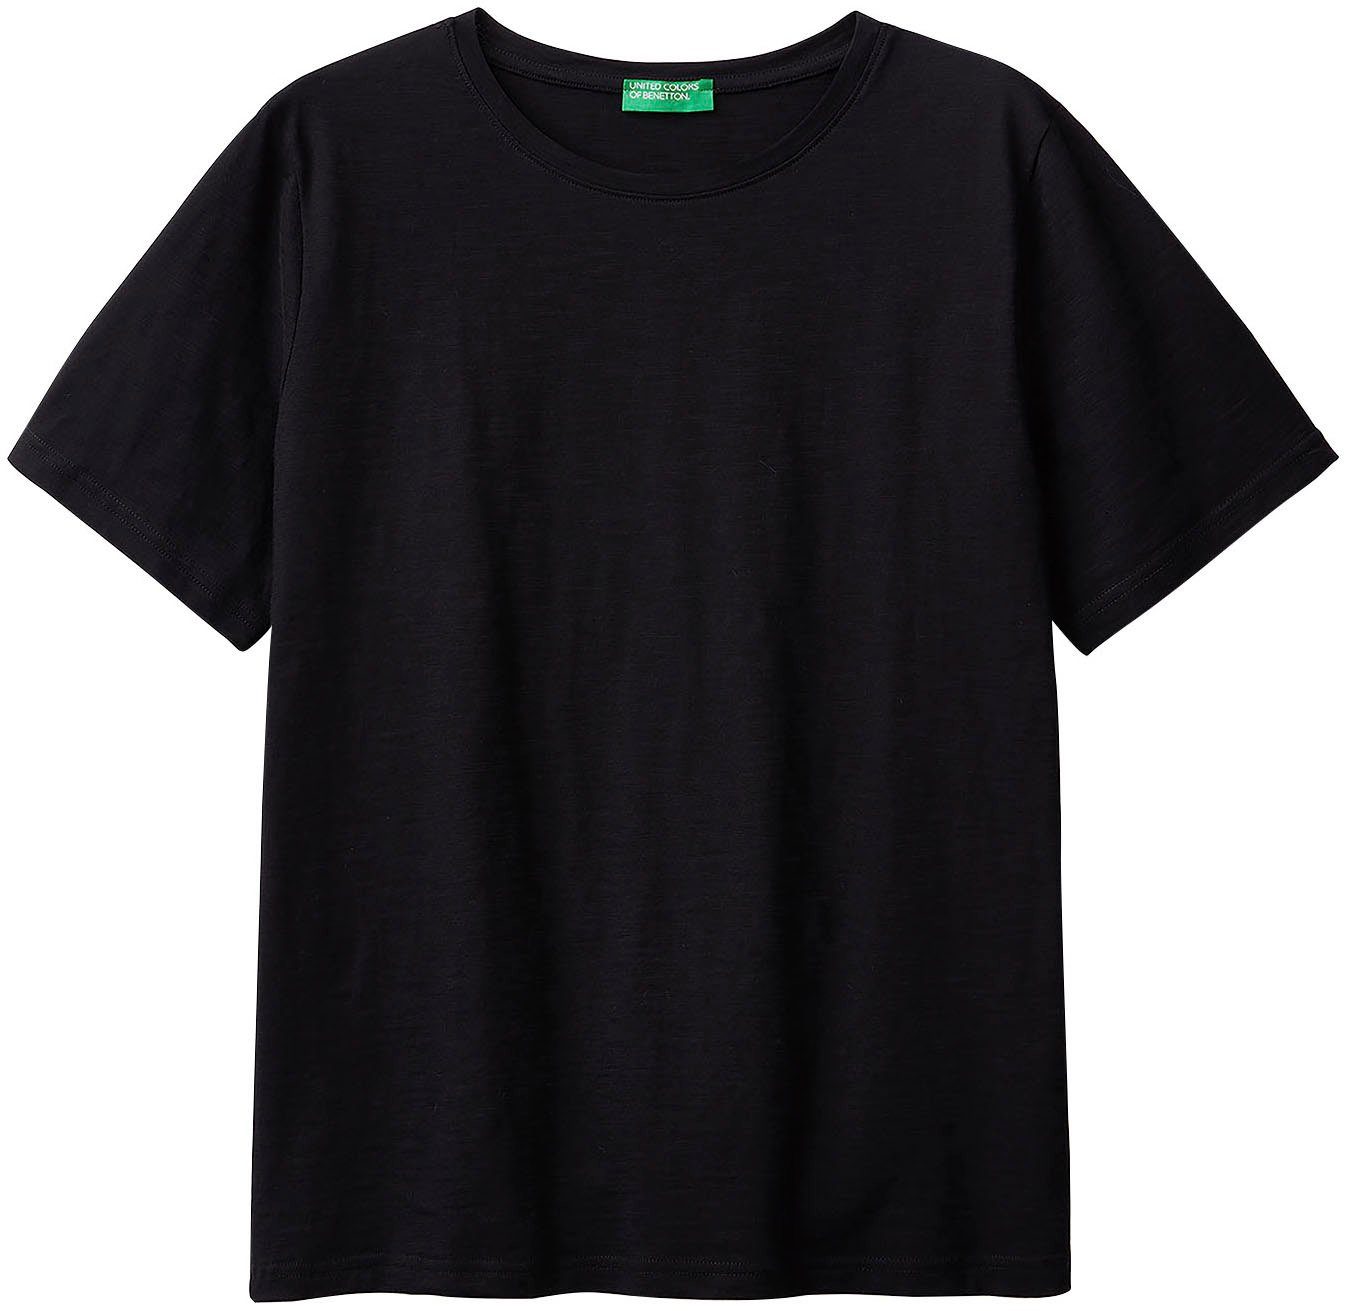 of schwarz T-Shirt in cleaner Colors United Benetton Basic-Optik